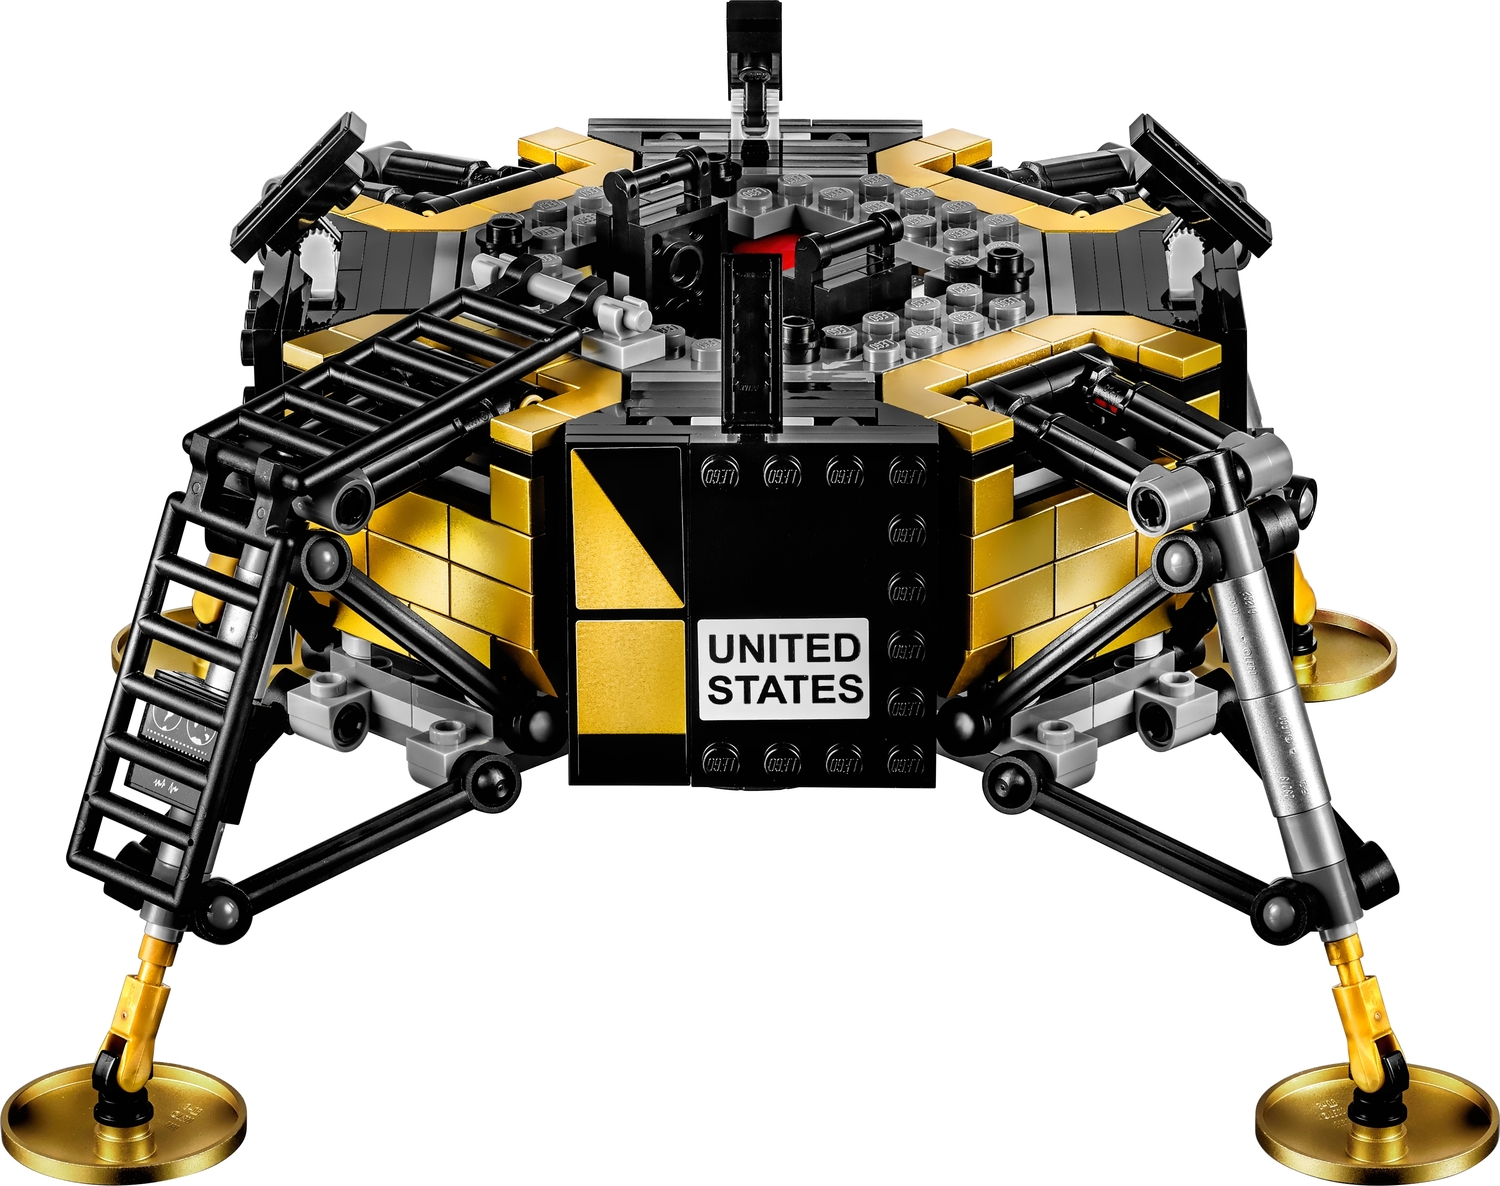 Nasa 11 Lunar Lander - Imagine That